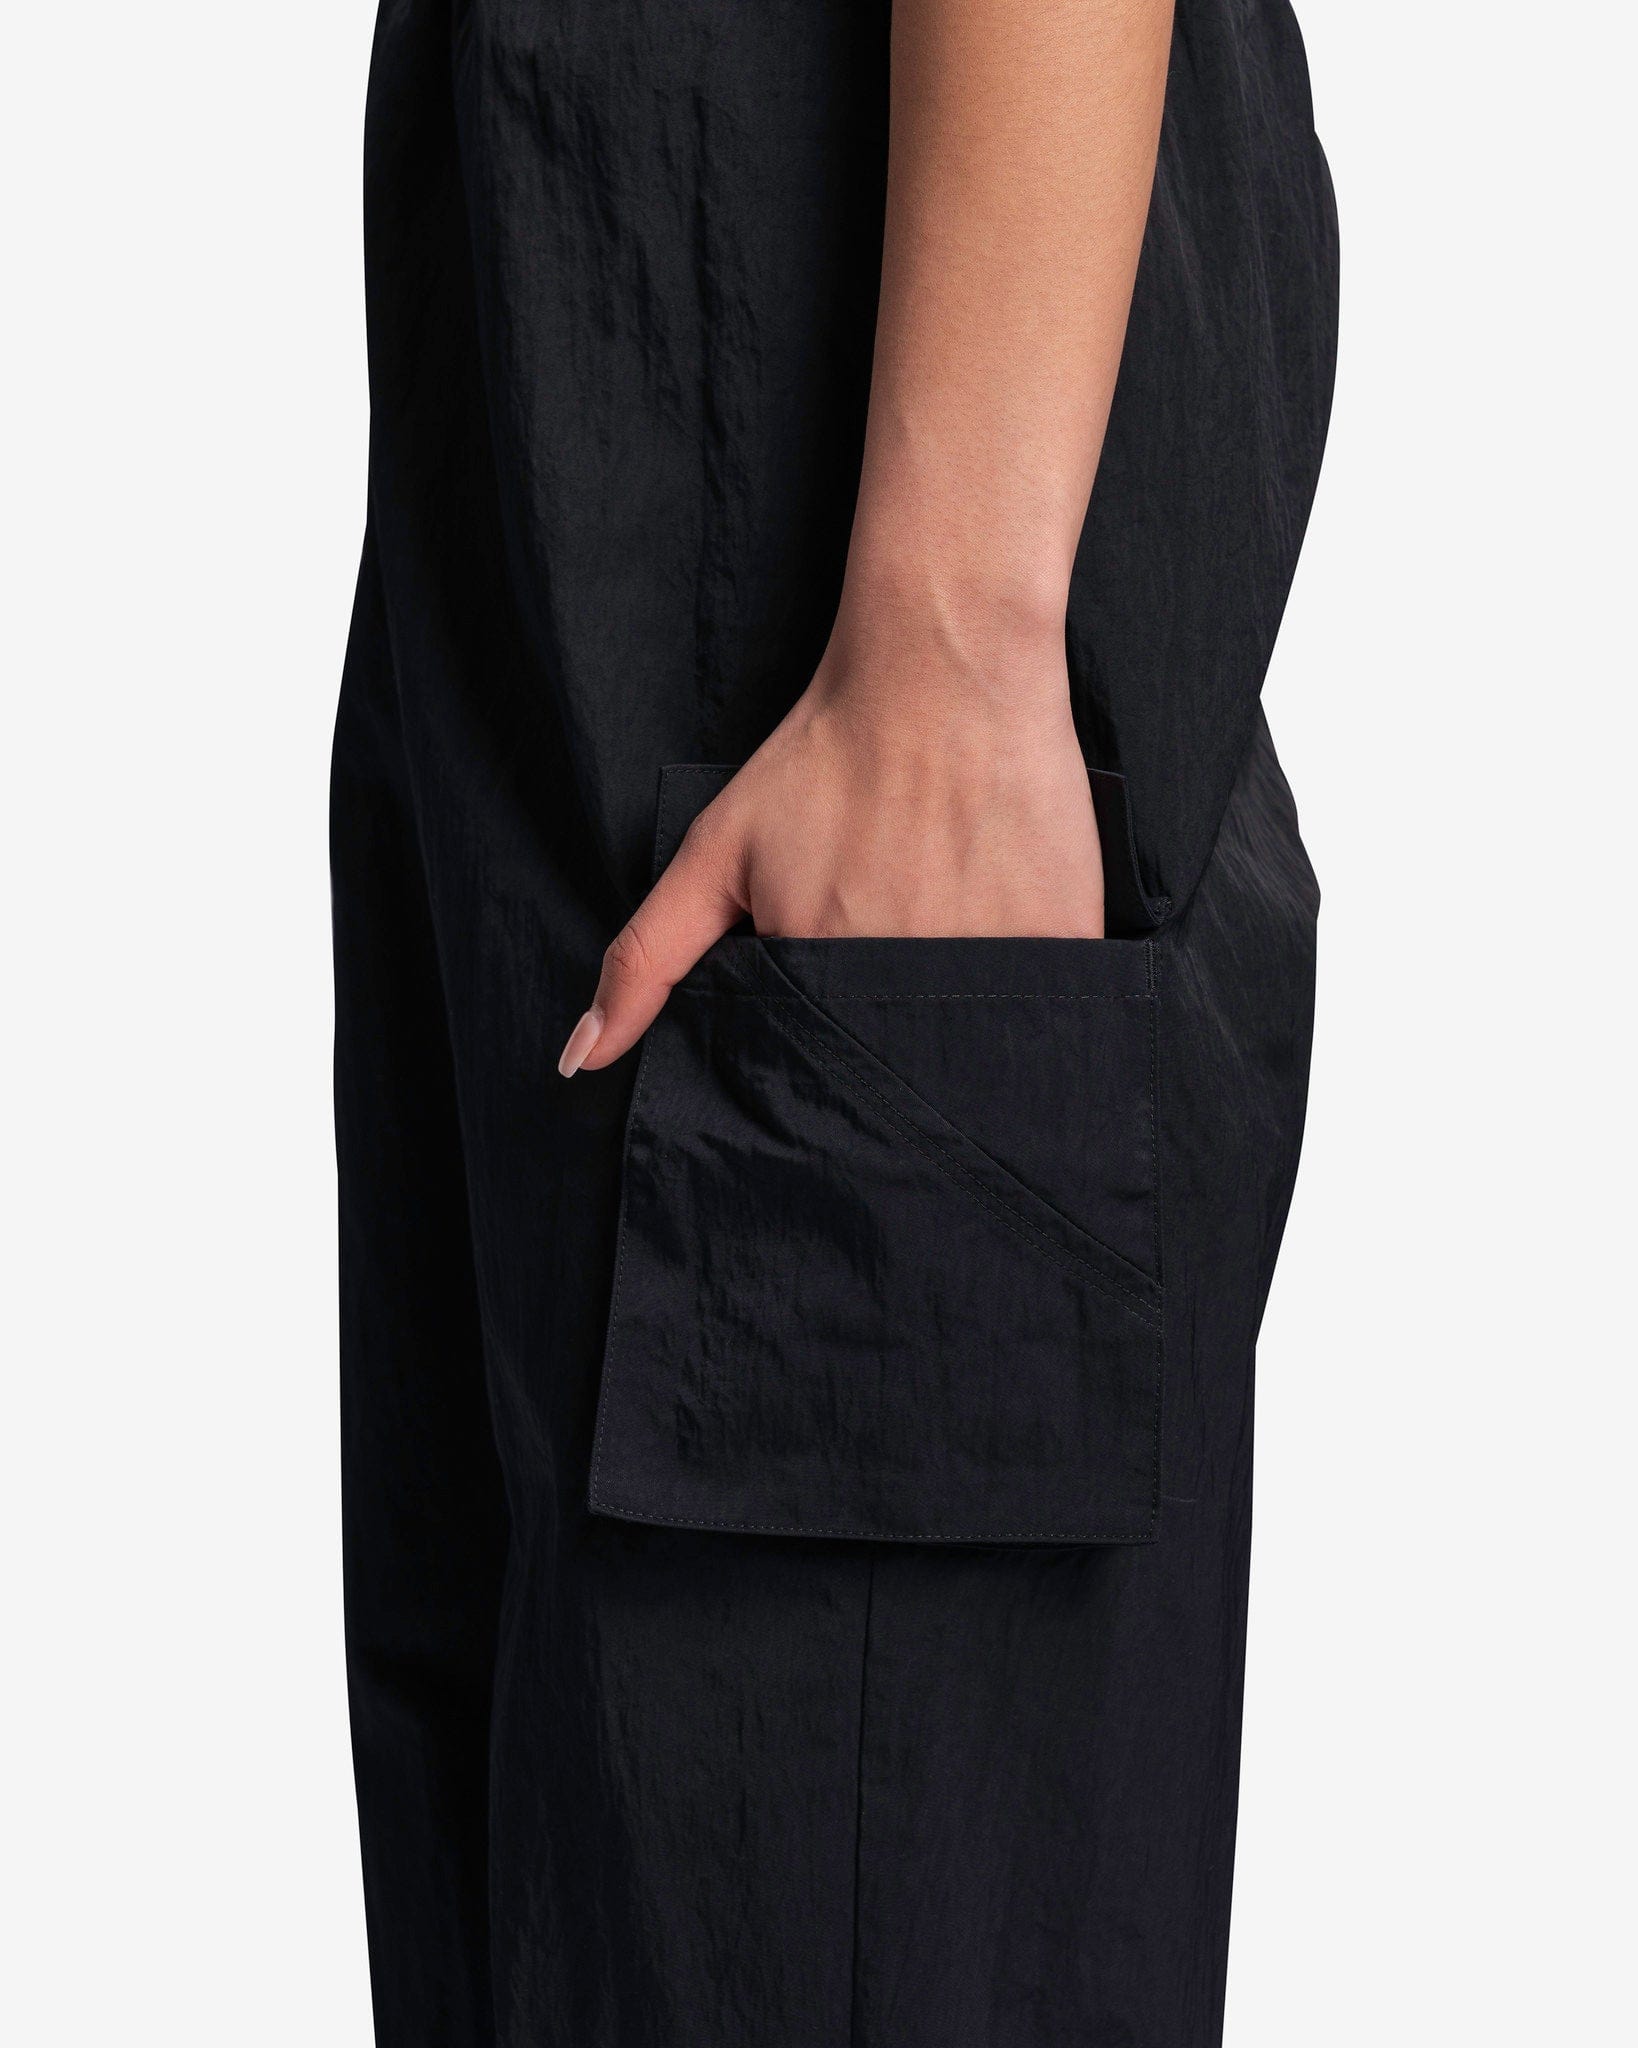 Nike Women Pants Women's High-Rise Woven Cargo Pants in Black